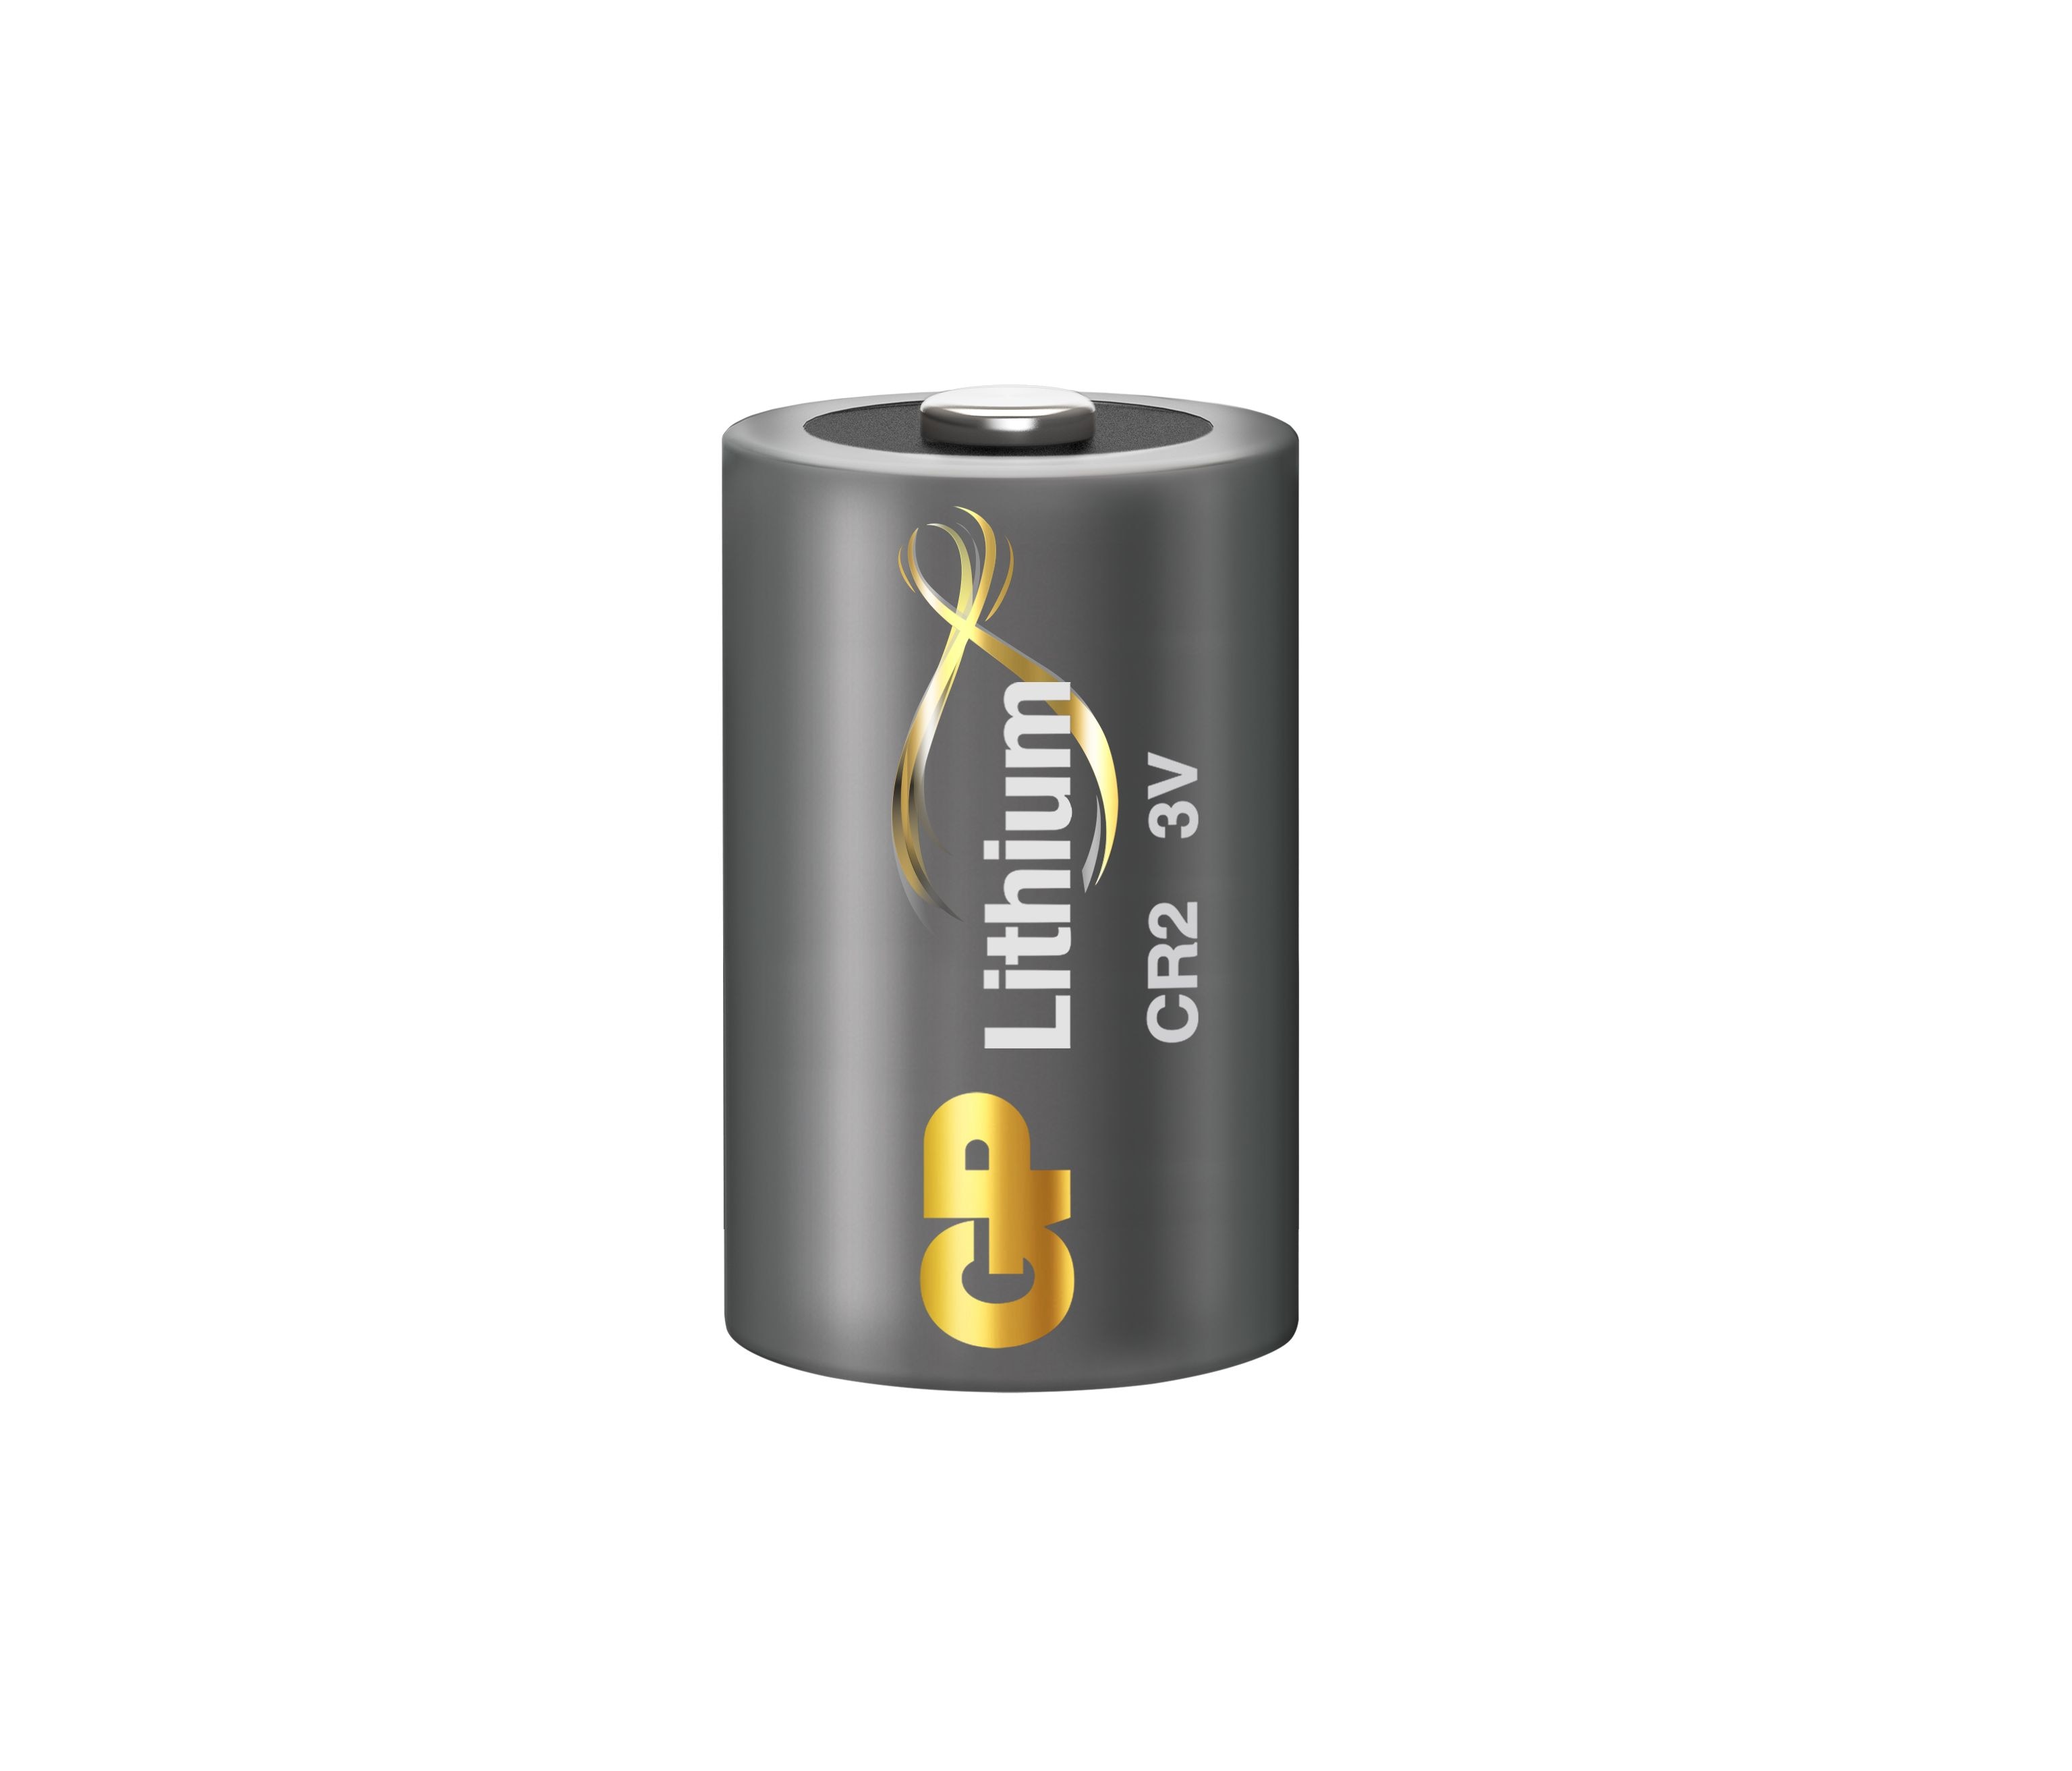 Lithium battery CR2